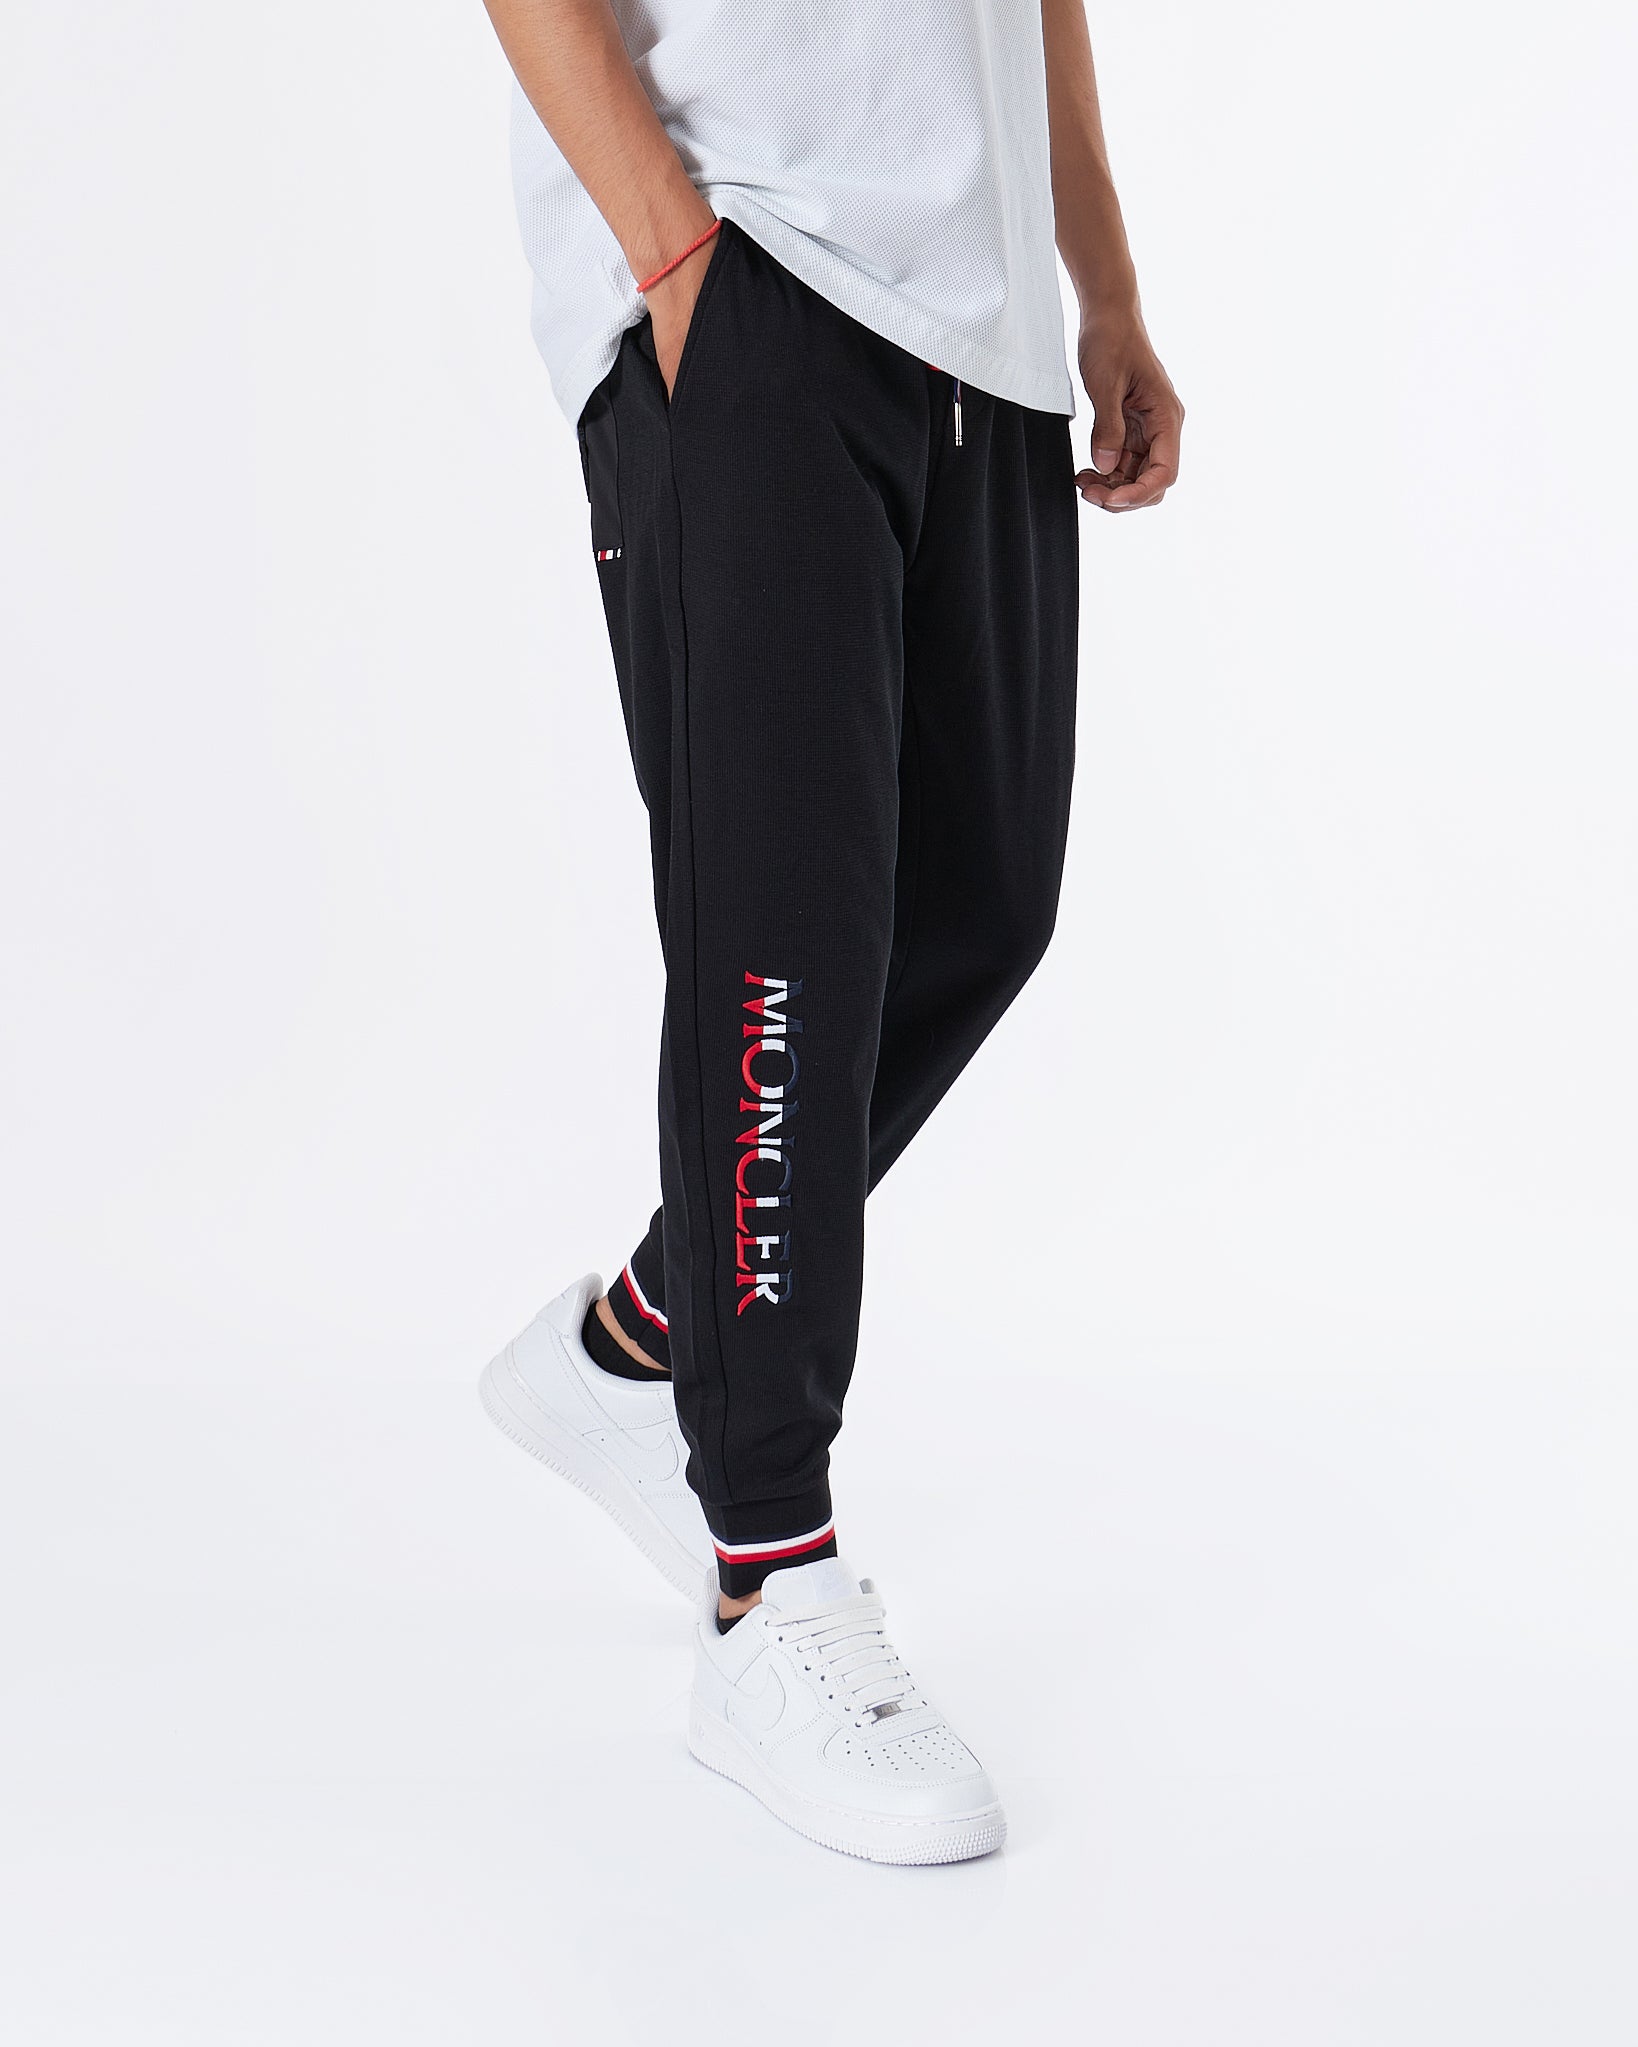 MON Logo Vertical Embroidered Men Black Joggers 68.90